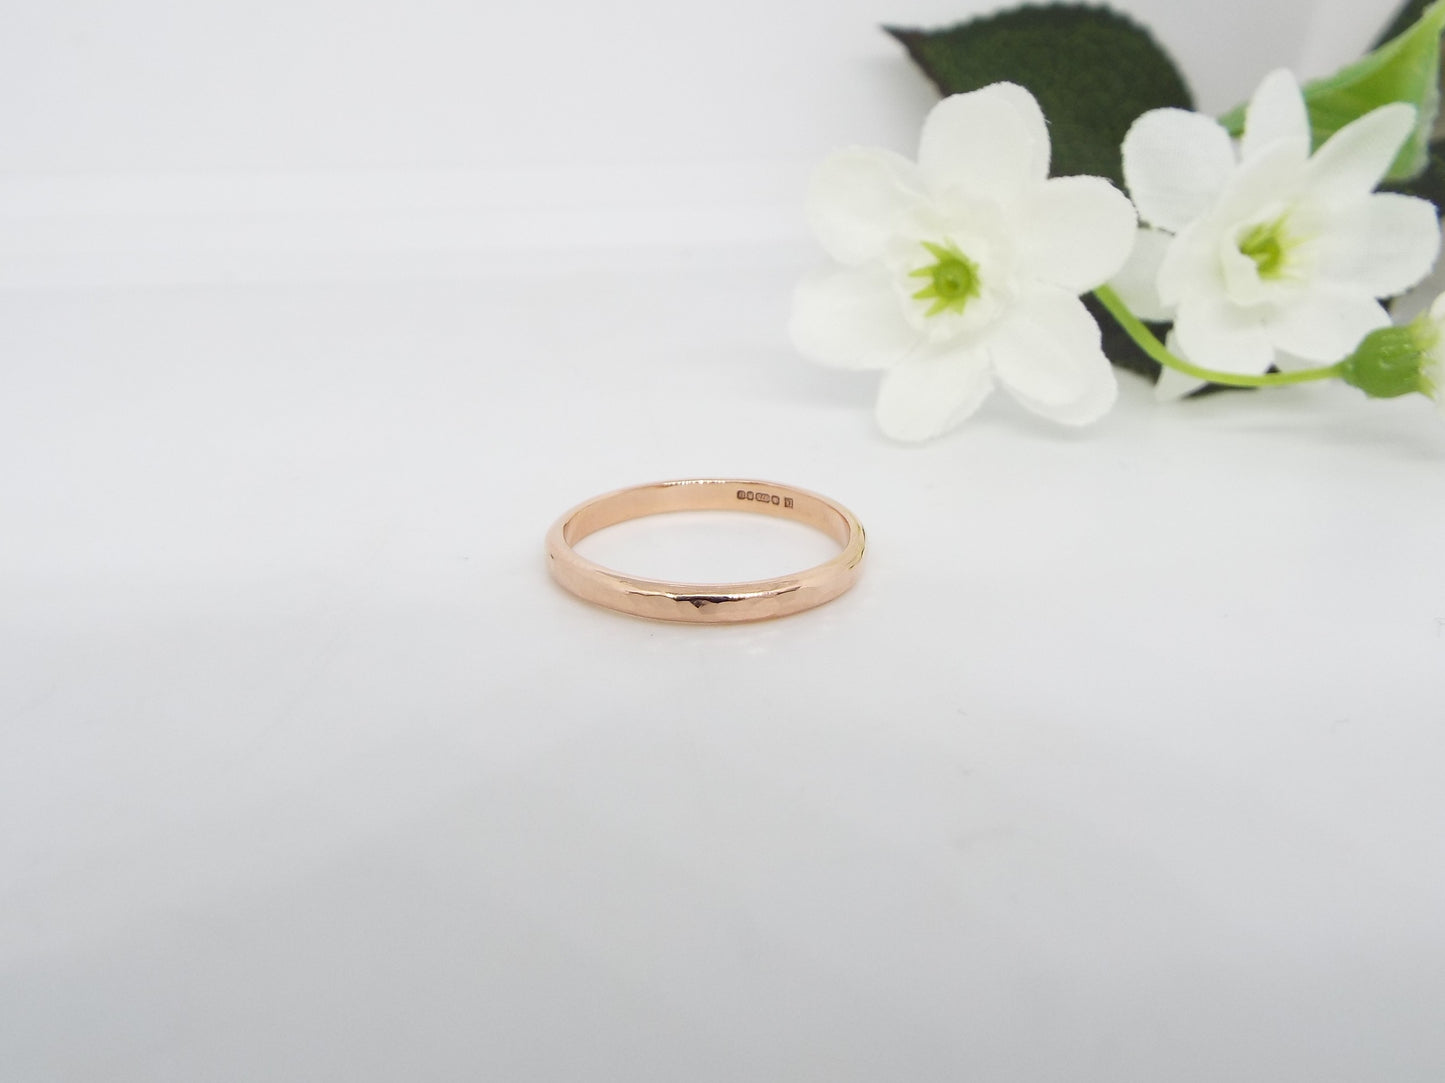 9ct Rose Gold Wedding Ring - Hammered finish - slim